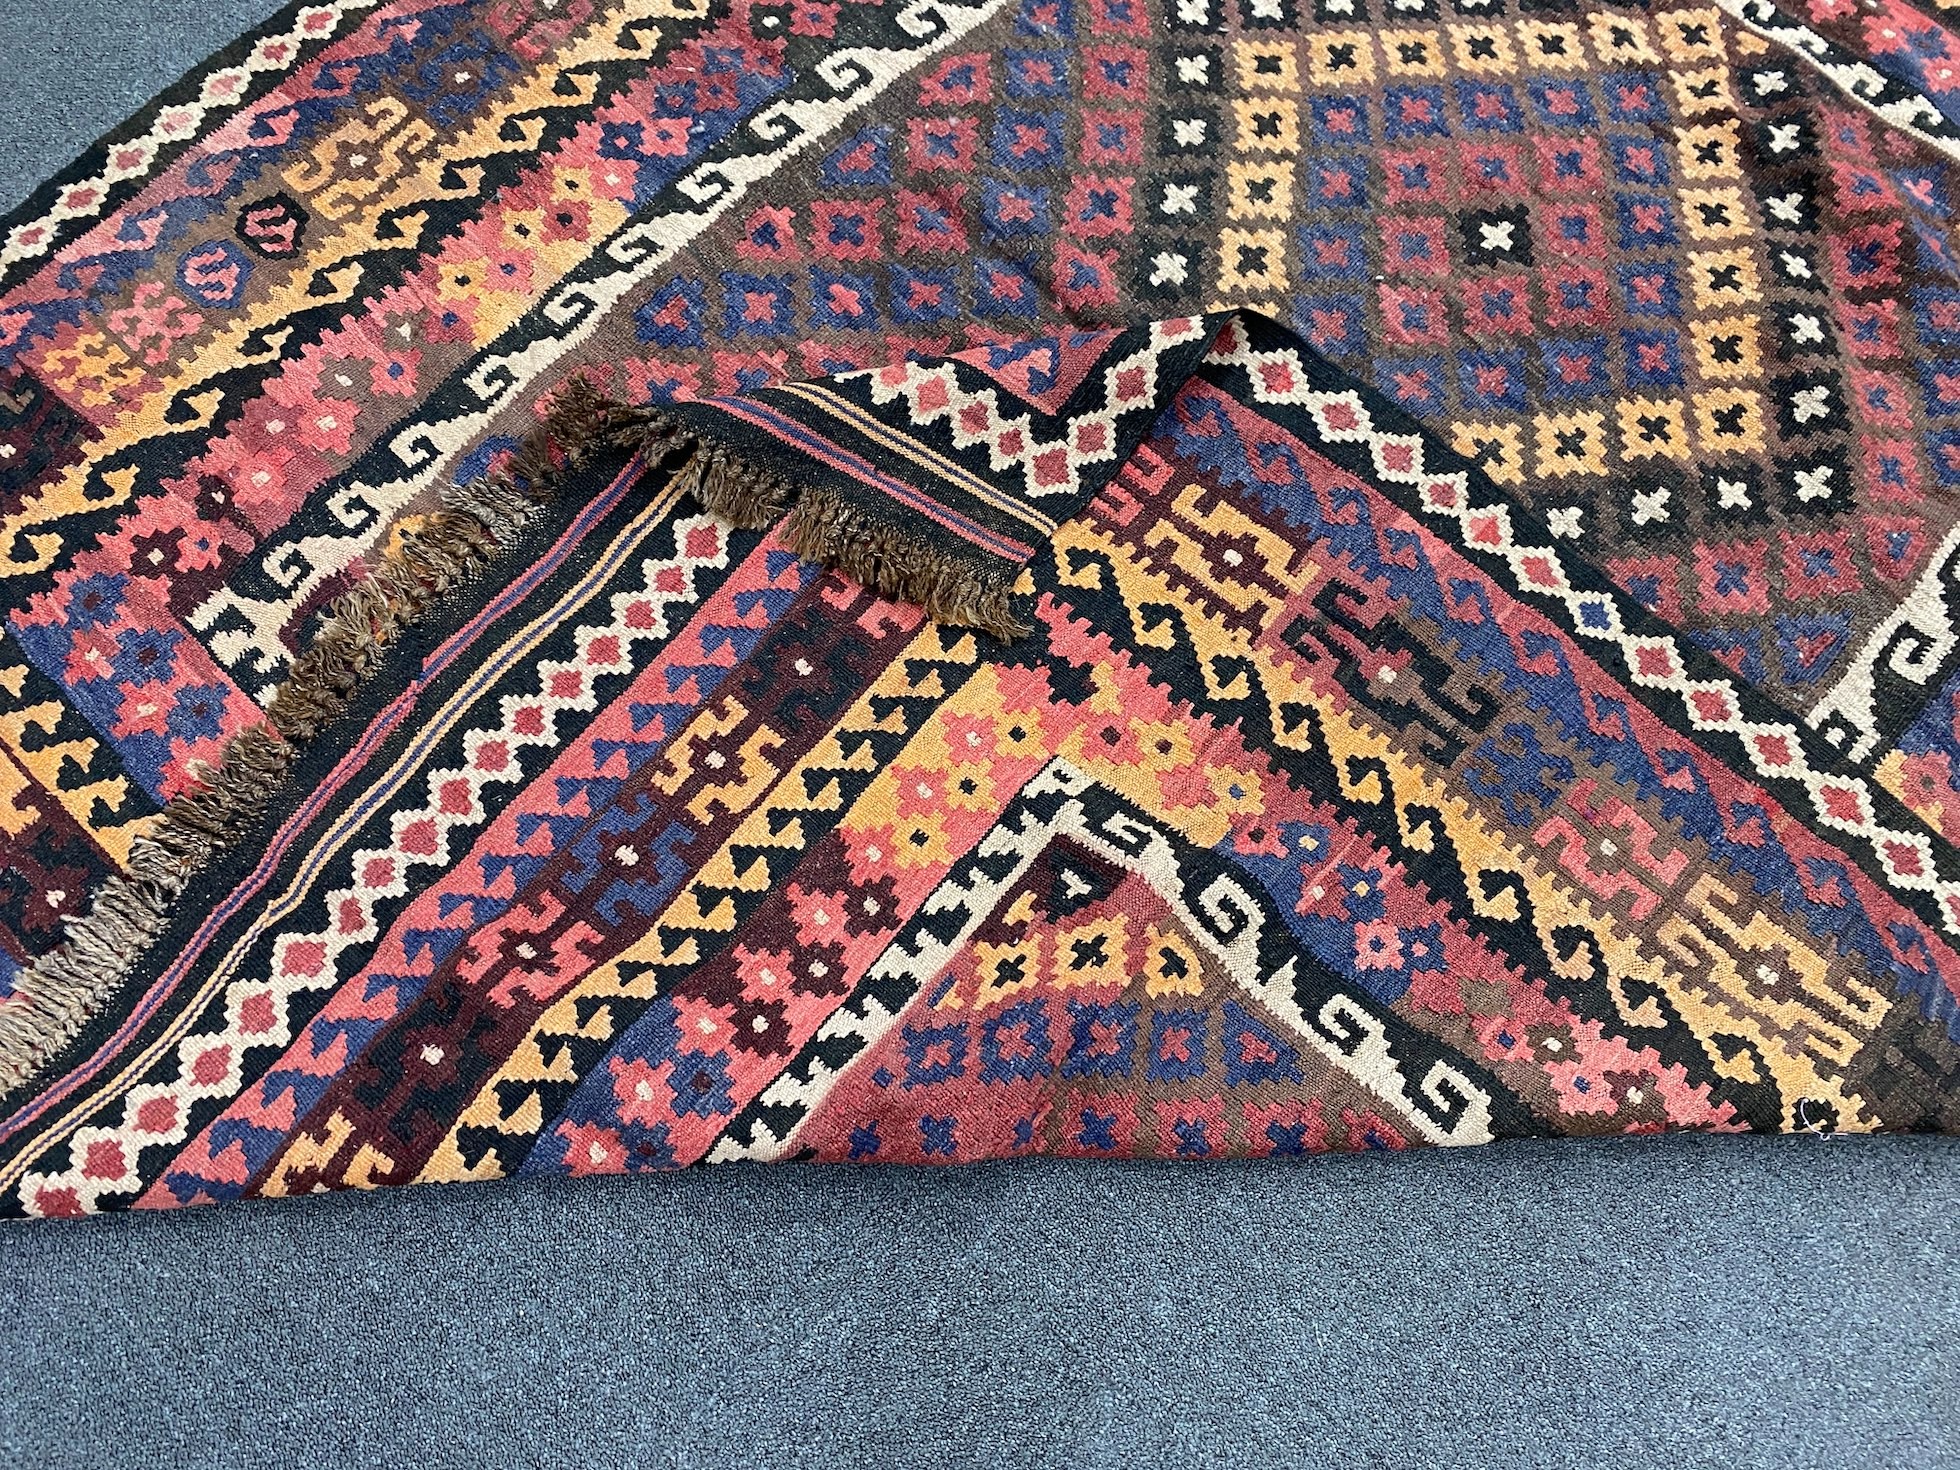 A polychrome flatweave rug, 203 x 160cm